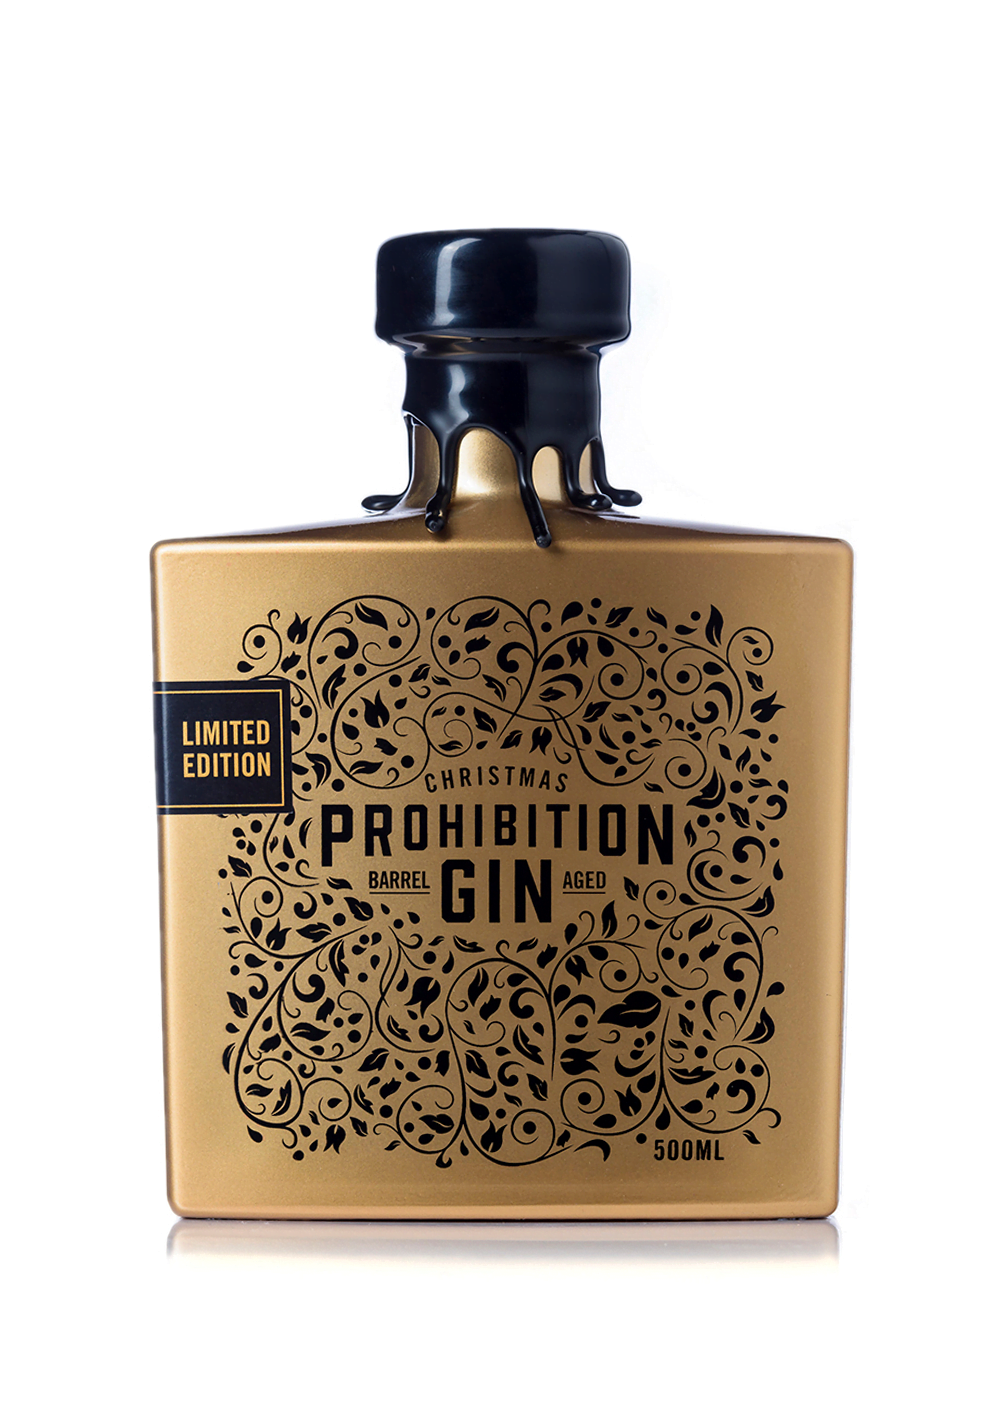 Prohibition Liquor Barrel Aged Christmas Gin